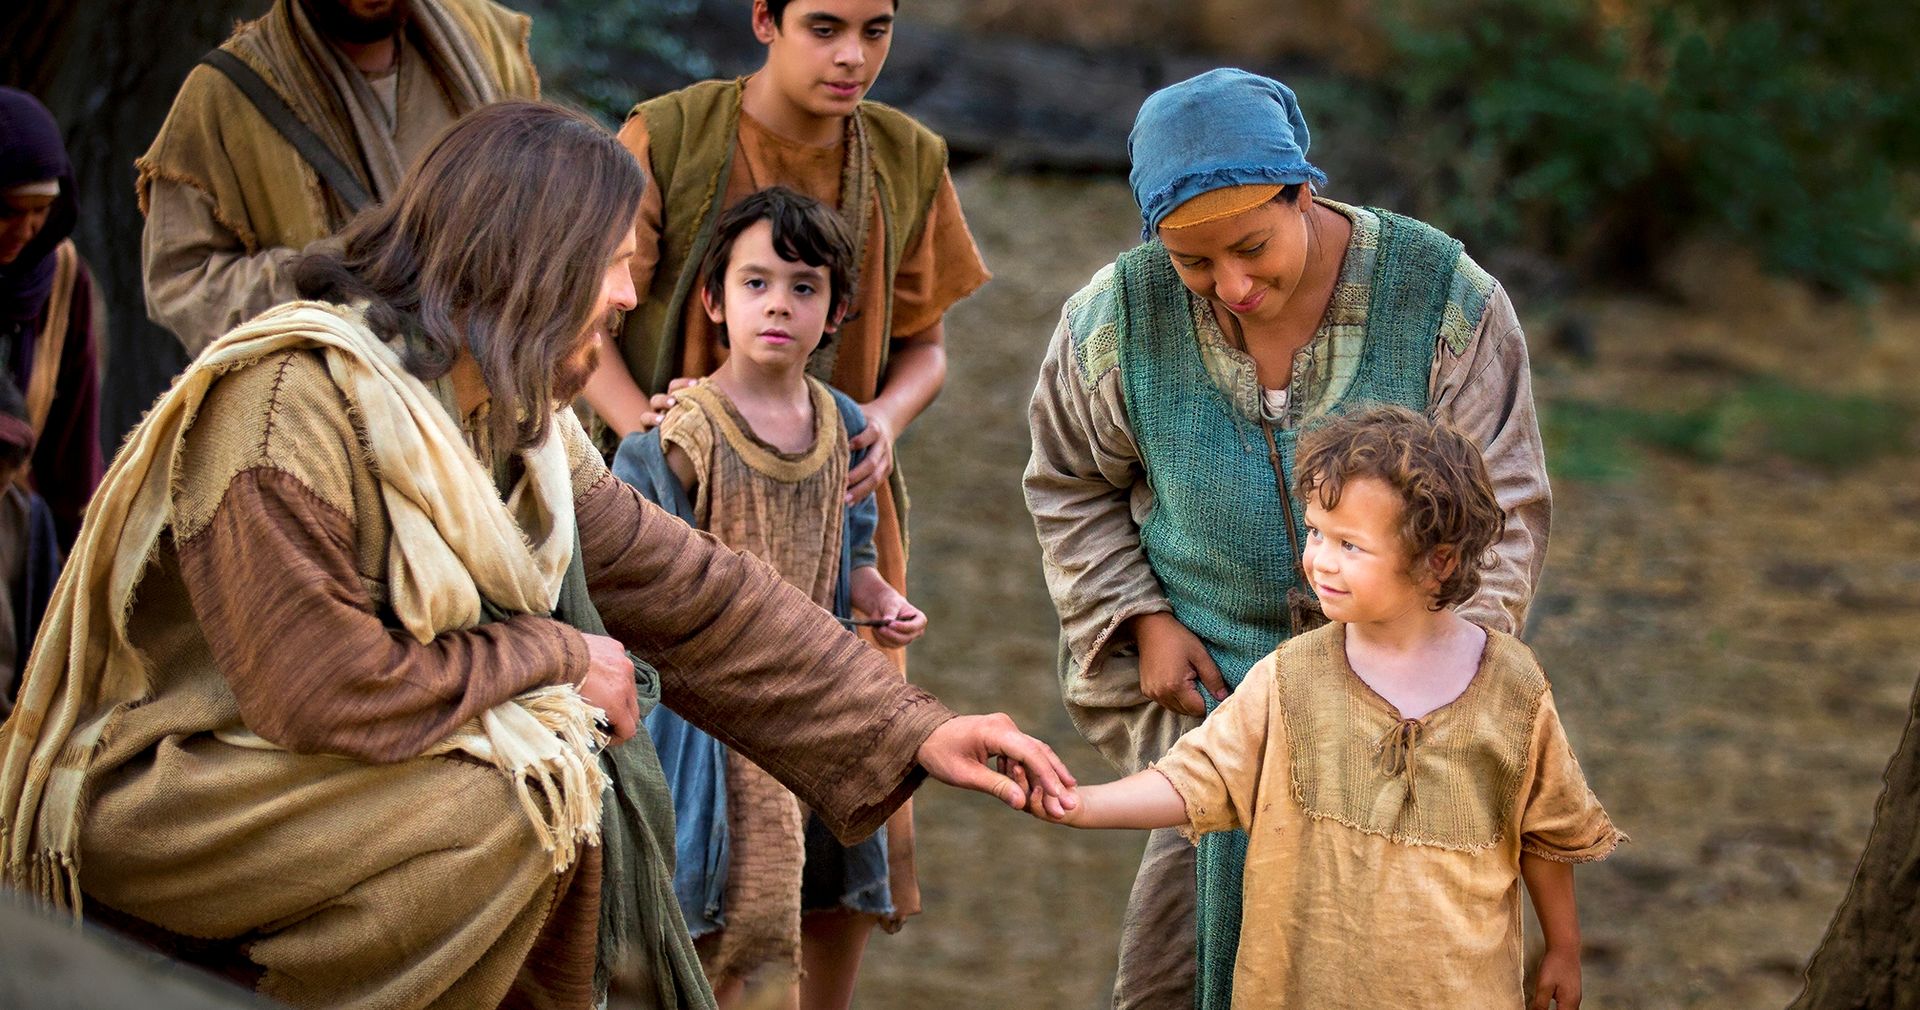 Actor portrays Jesus loving a child.